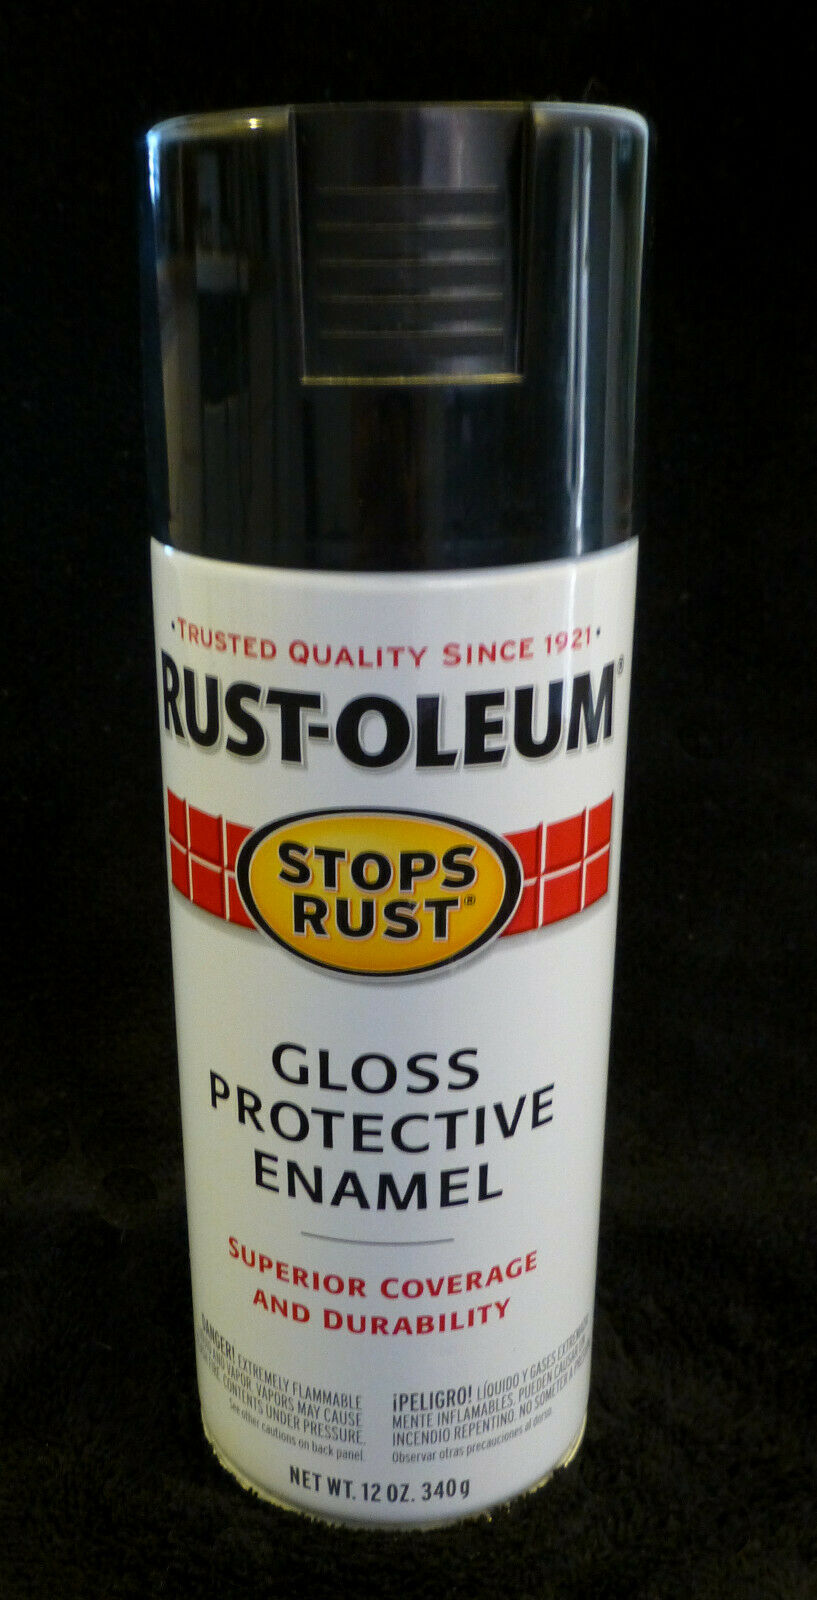 Vintage Rust-Oleum Gloss Protective Enamel 7779 Spray Paint Can